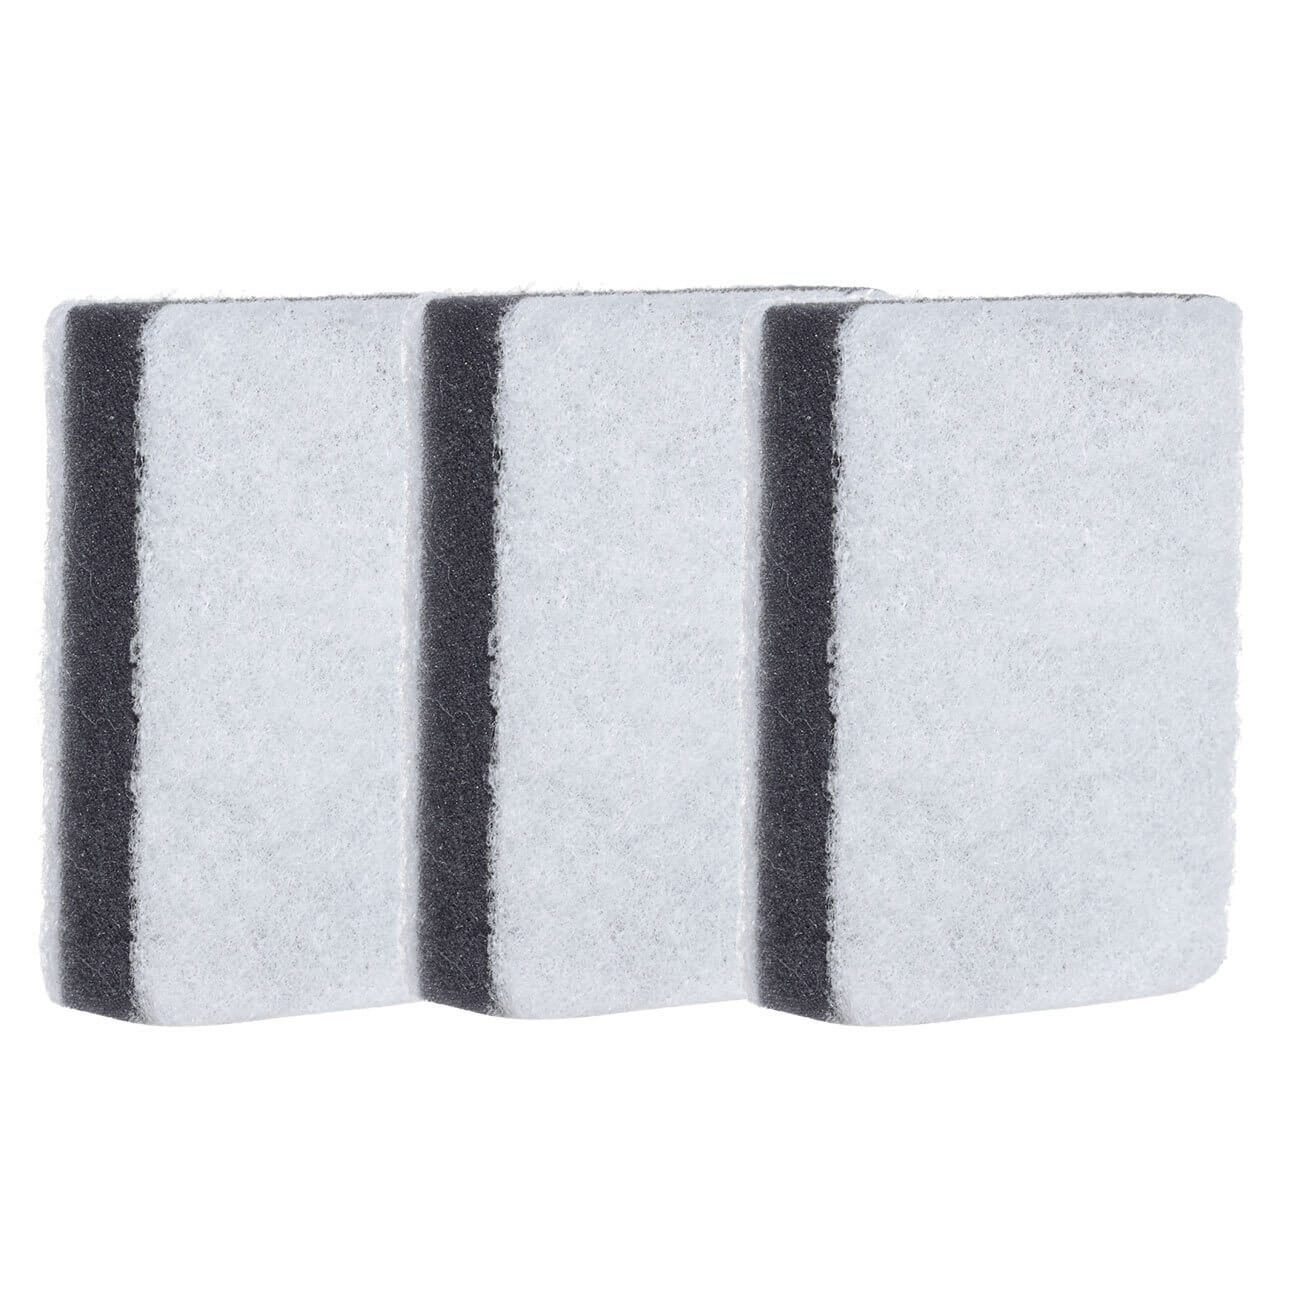 Dish washing sponge, 10x7 cm, 3 pcs, foam rubber/non-abrasive, black and white, Black clean изображение № 1